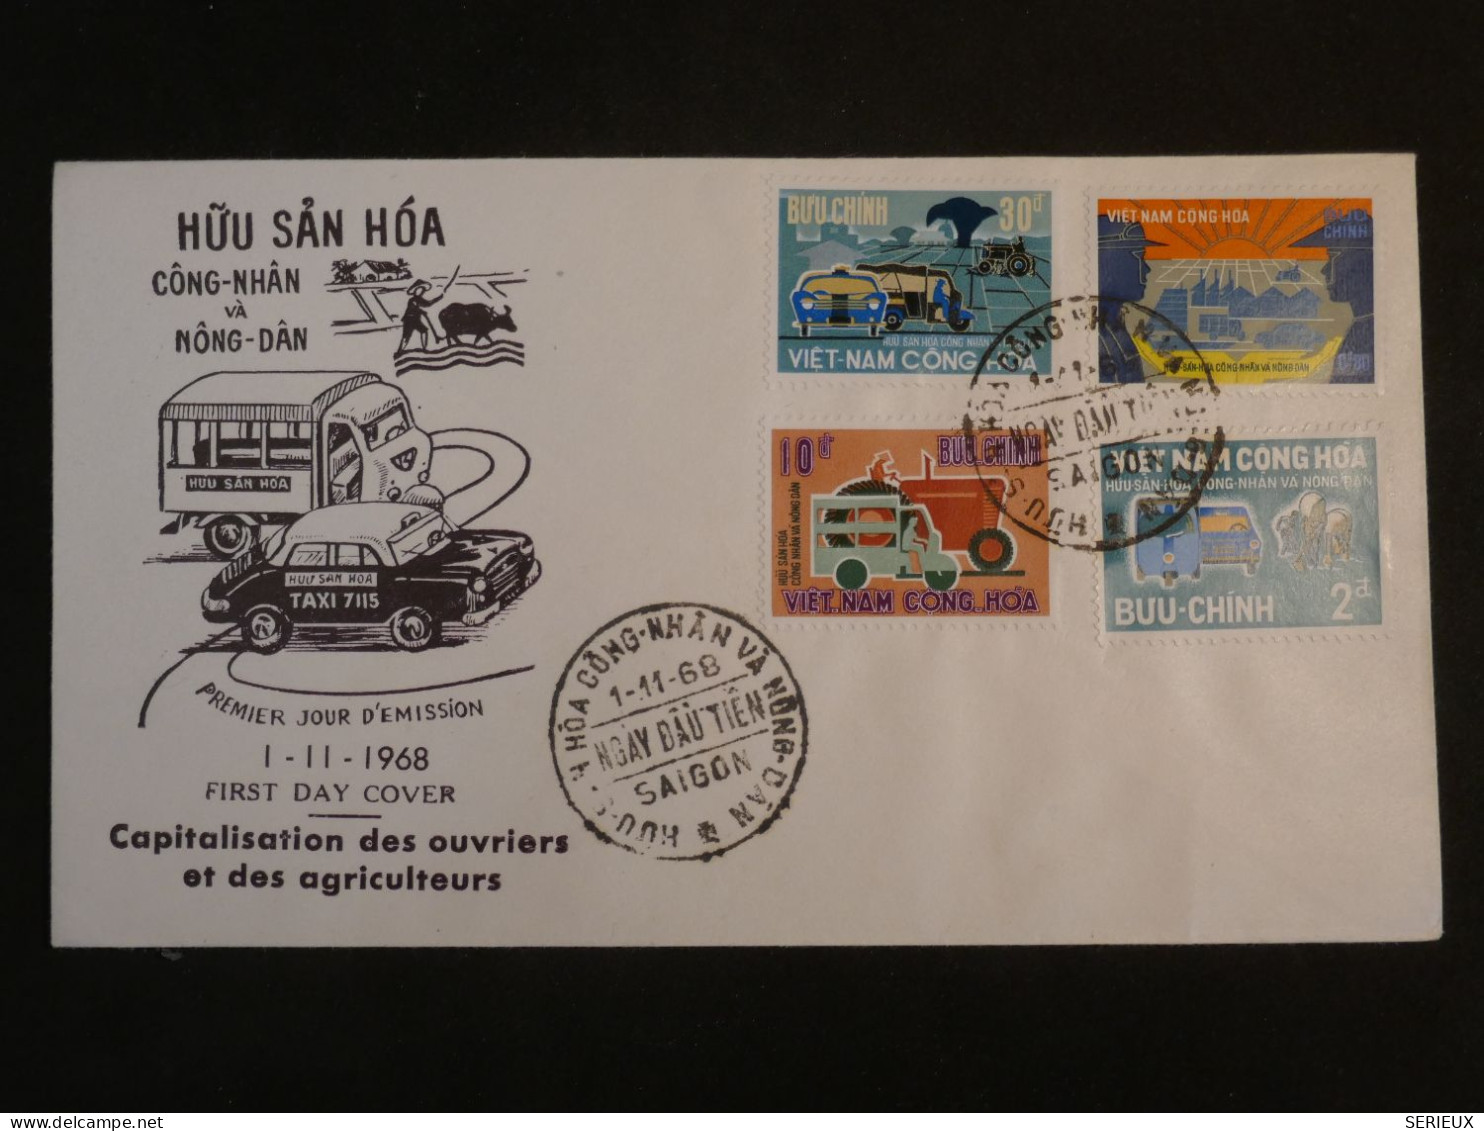 AJ0  VIETNAM  CONG HOA BELLE LETTRE FDC  1968 HUU SAN HOA  SAIGON . +30 D +AFF. PLAISANT+++ - Vietnam